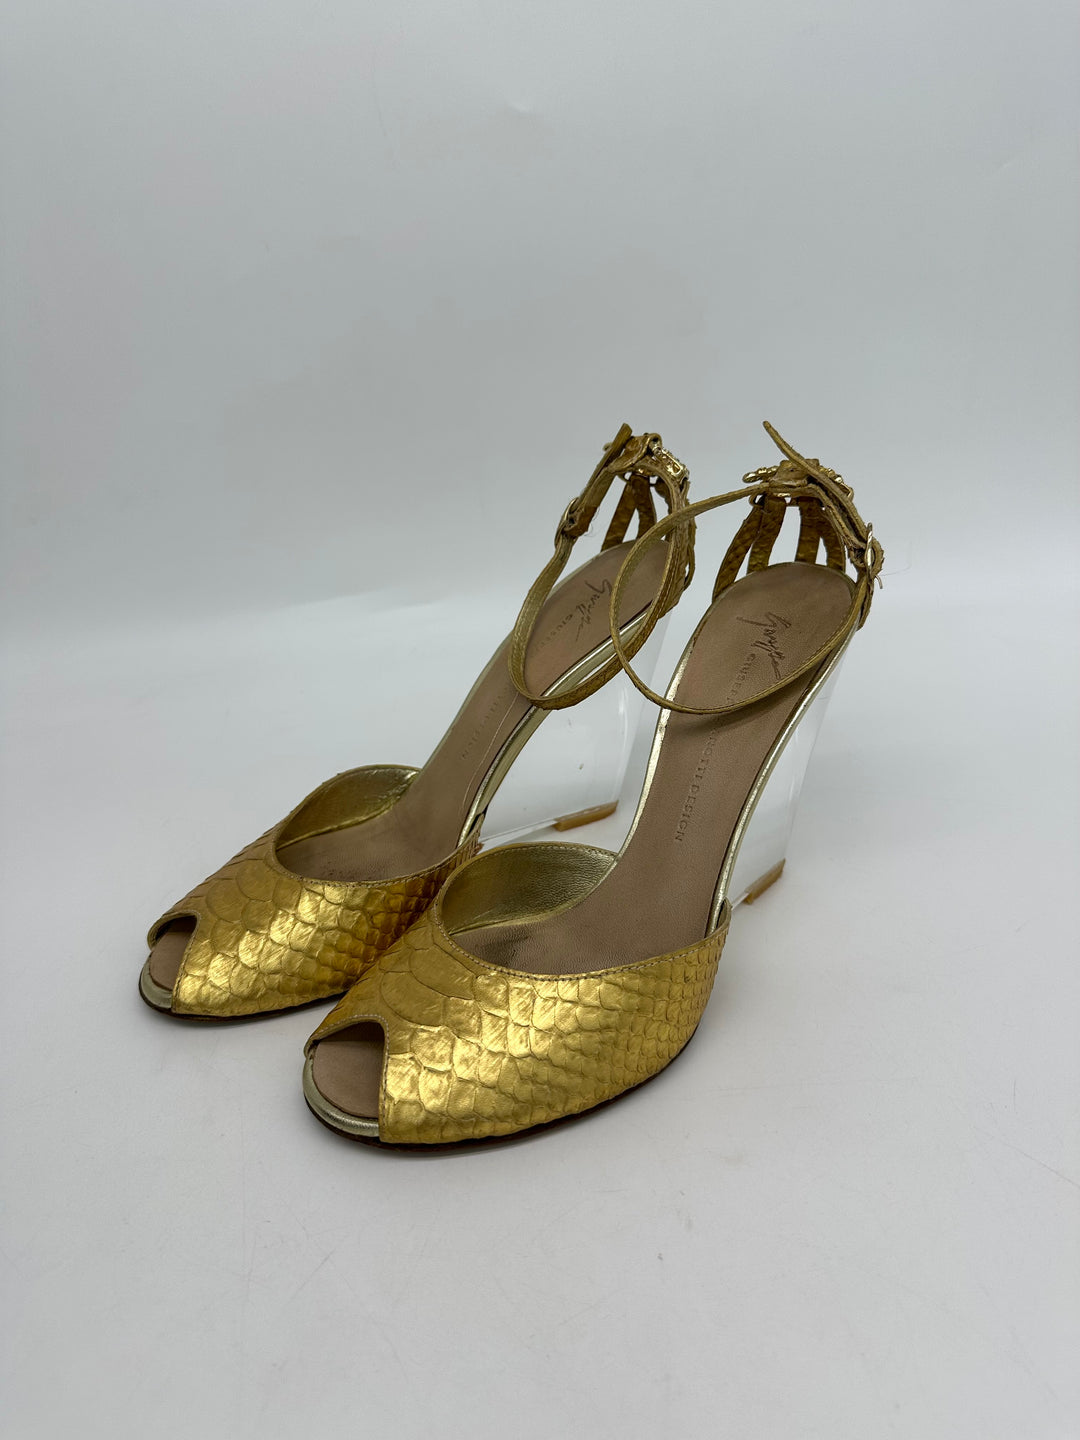 Leather Sandals Giuseppe Zanotti Gold Size 38